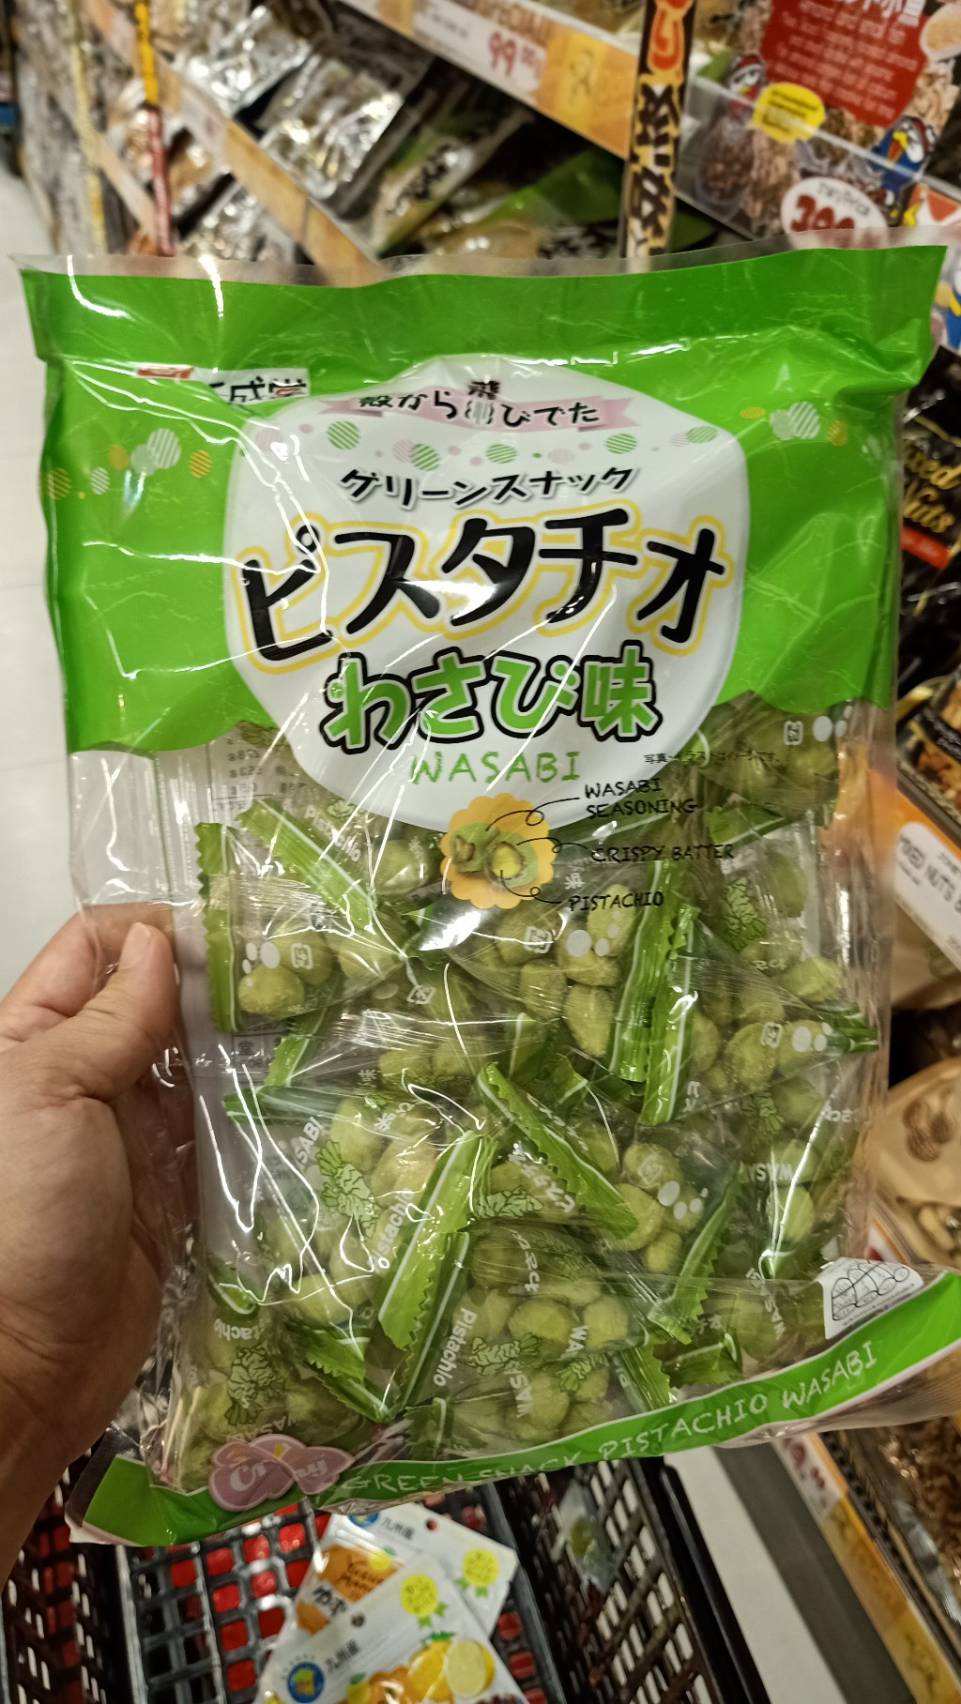 ecook ญี่ปุ่น ดองกี้ ถั่ว พิสตาชิโอ อบกรอบ วาซาบิ hisupa dk roasted pistachio wasabi 240g